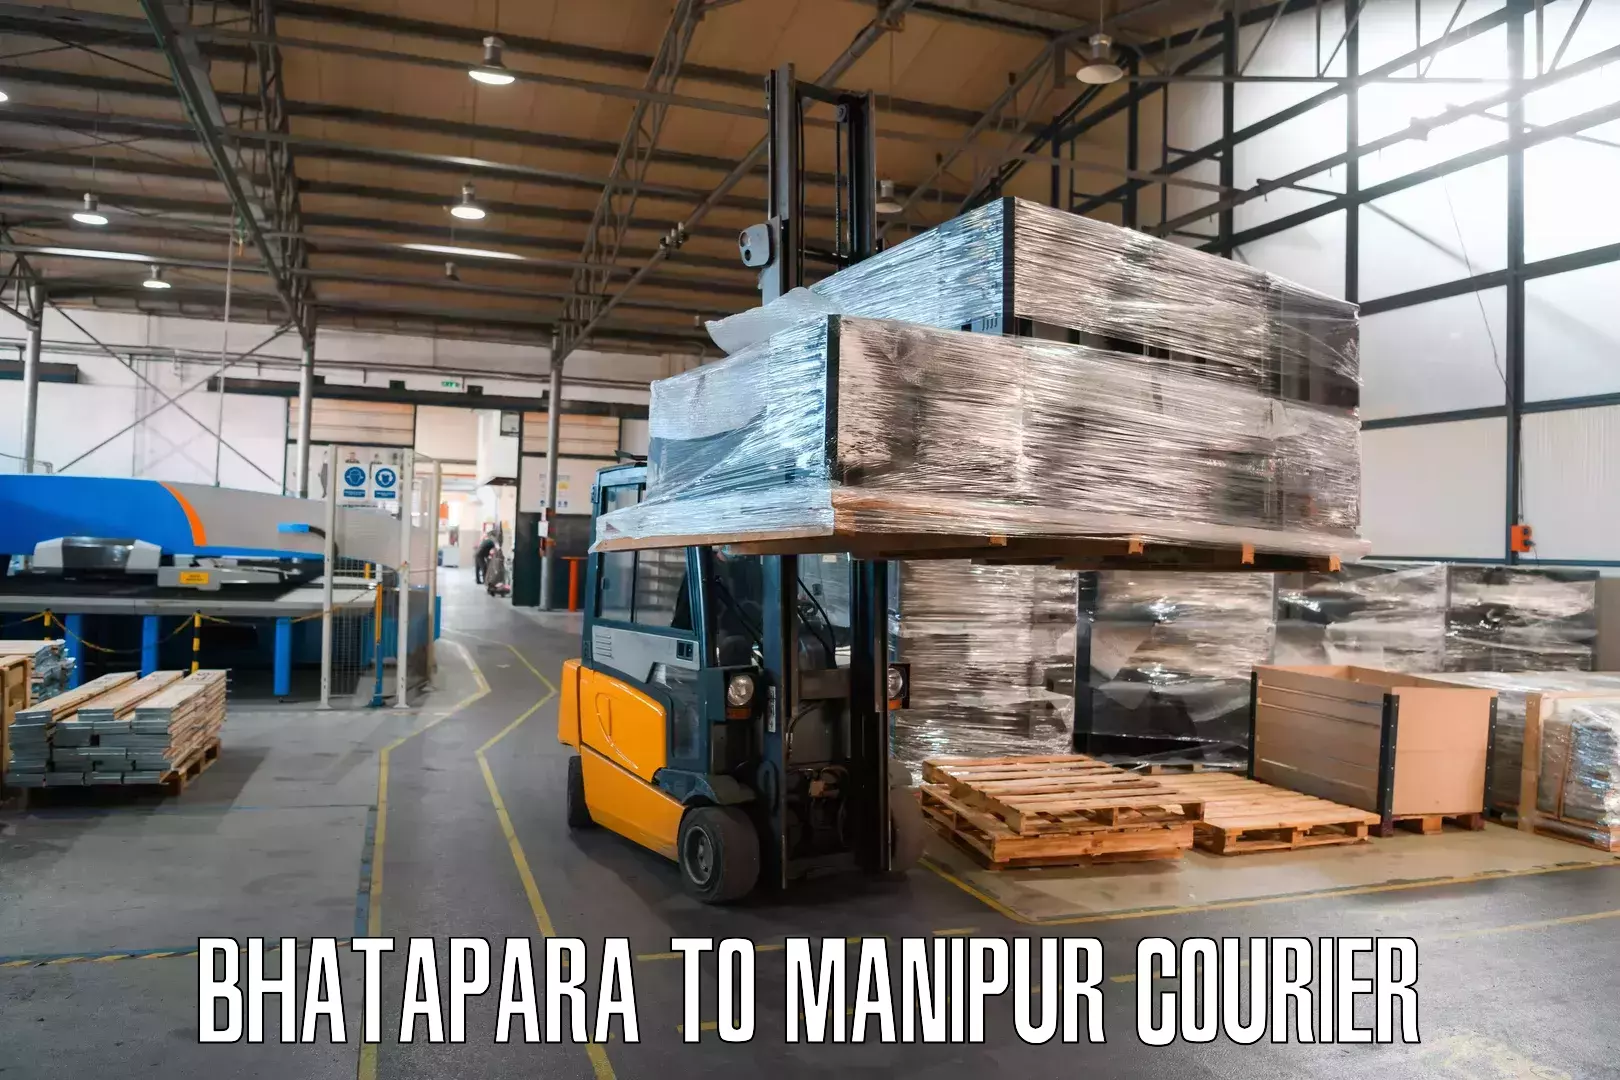 Digital courier platforms Bhatapara to Kanti